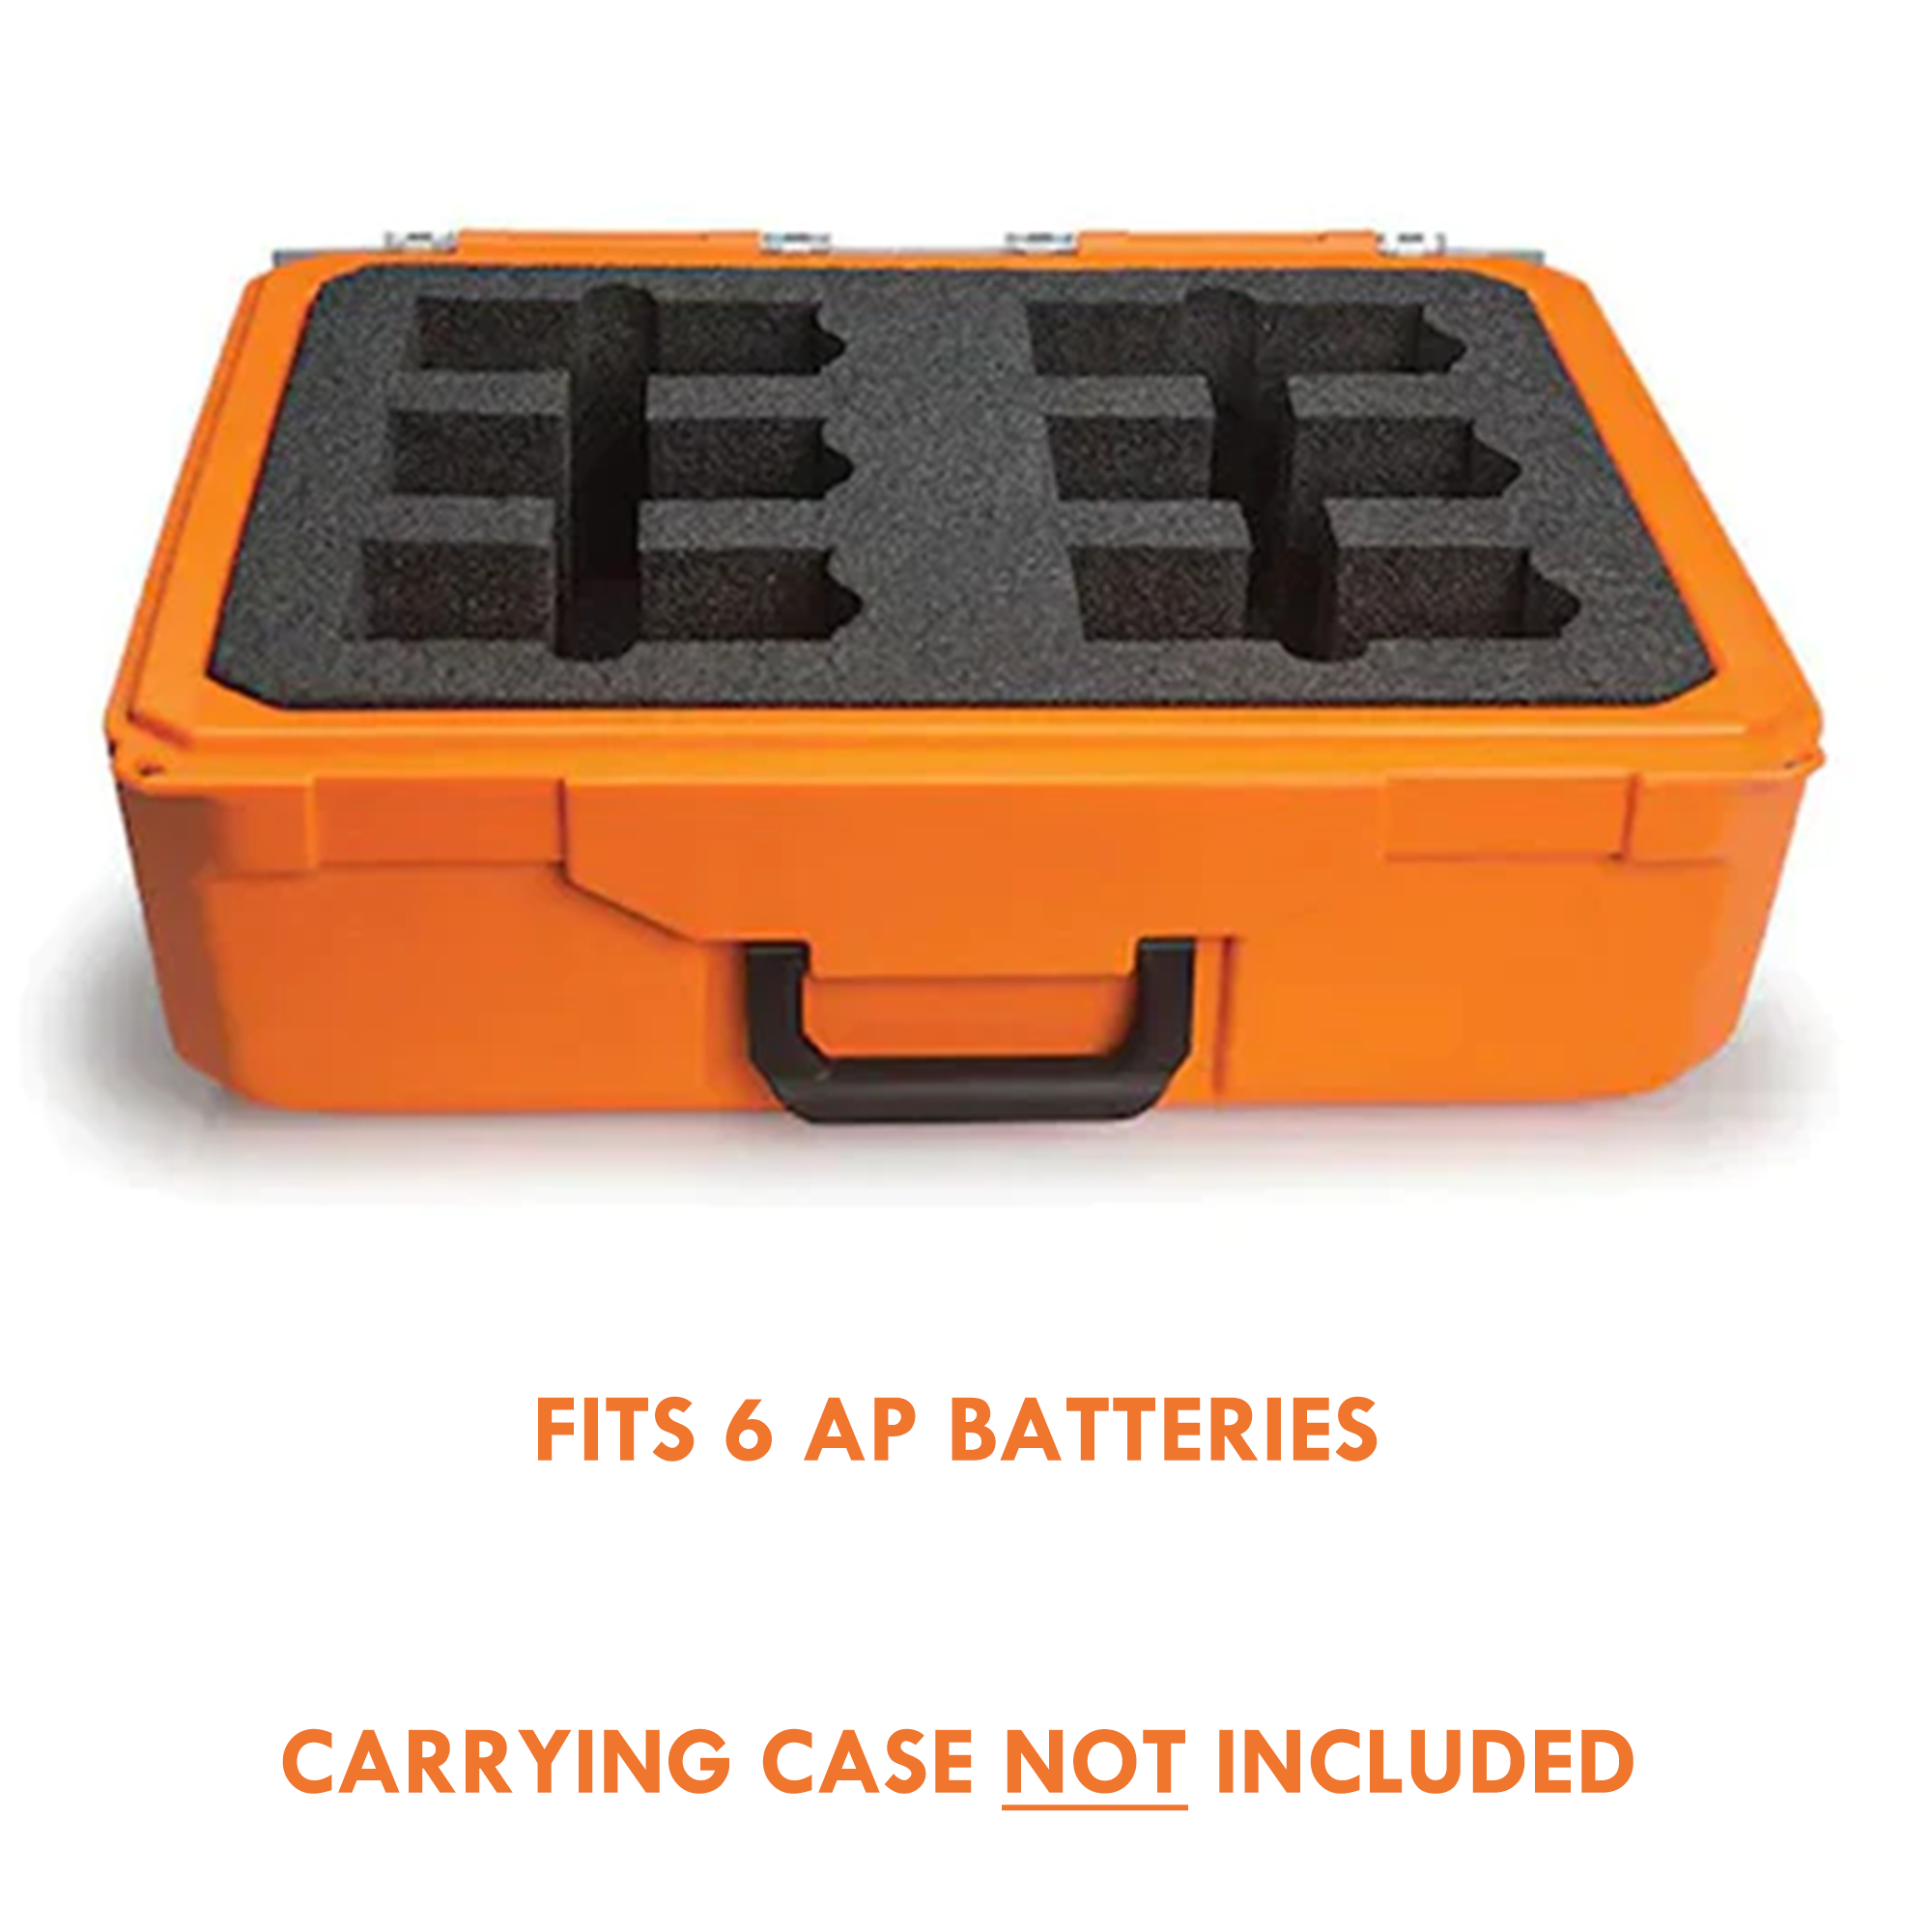 Stihl Battery Case Insert Fits 6 AP batteries | 7010 871 0030